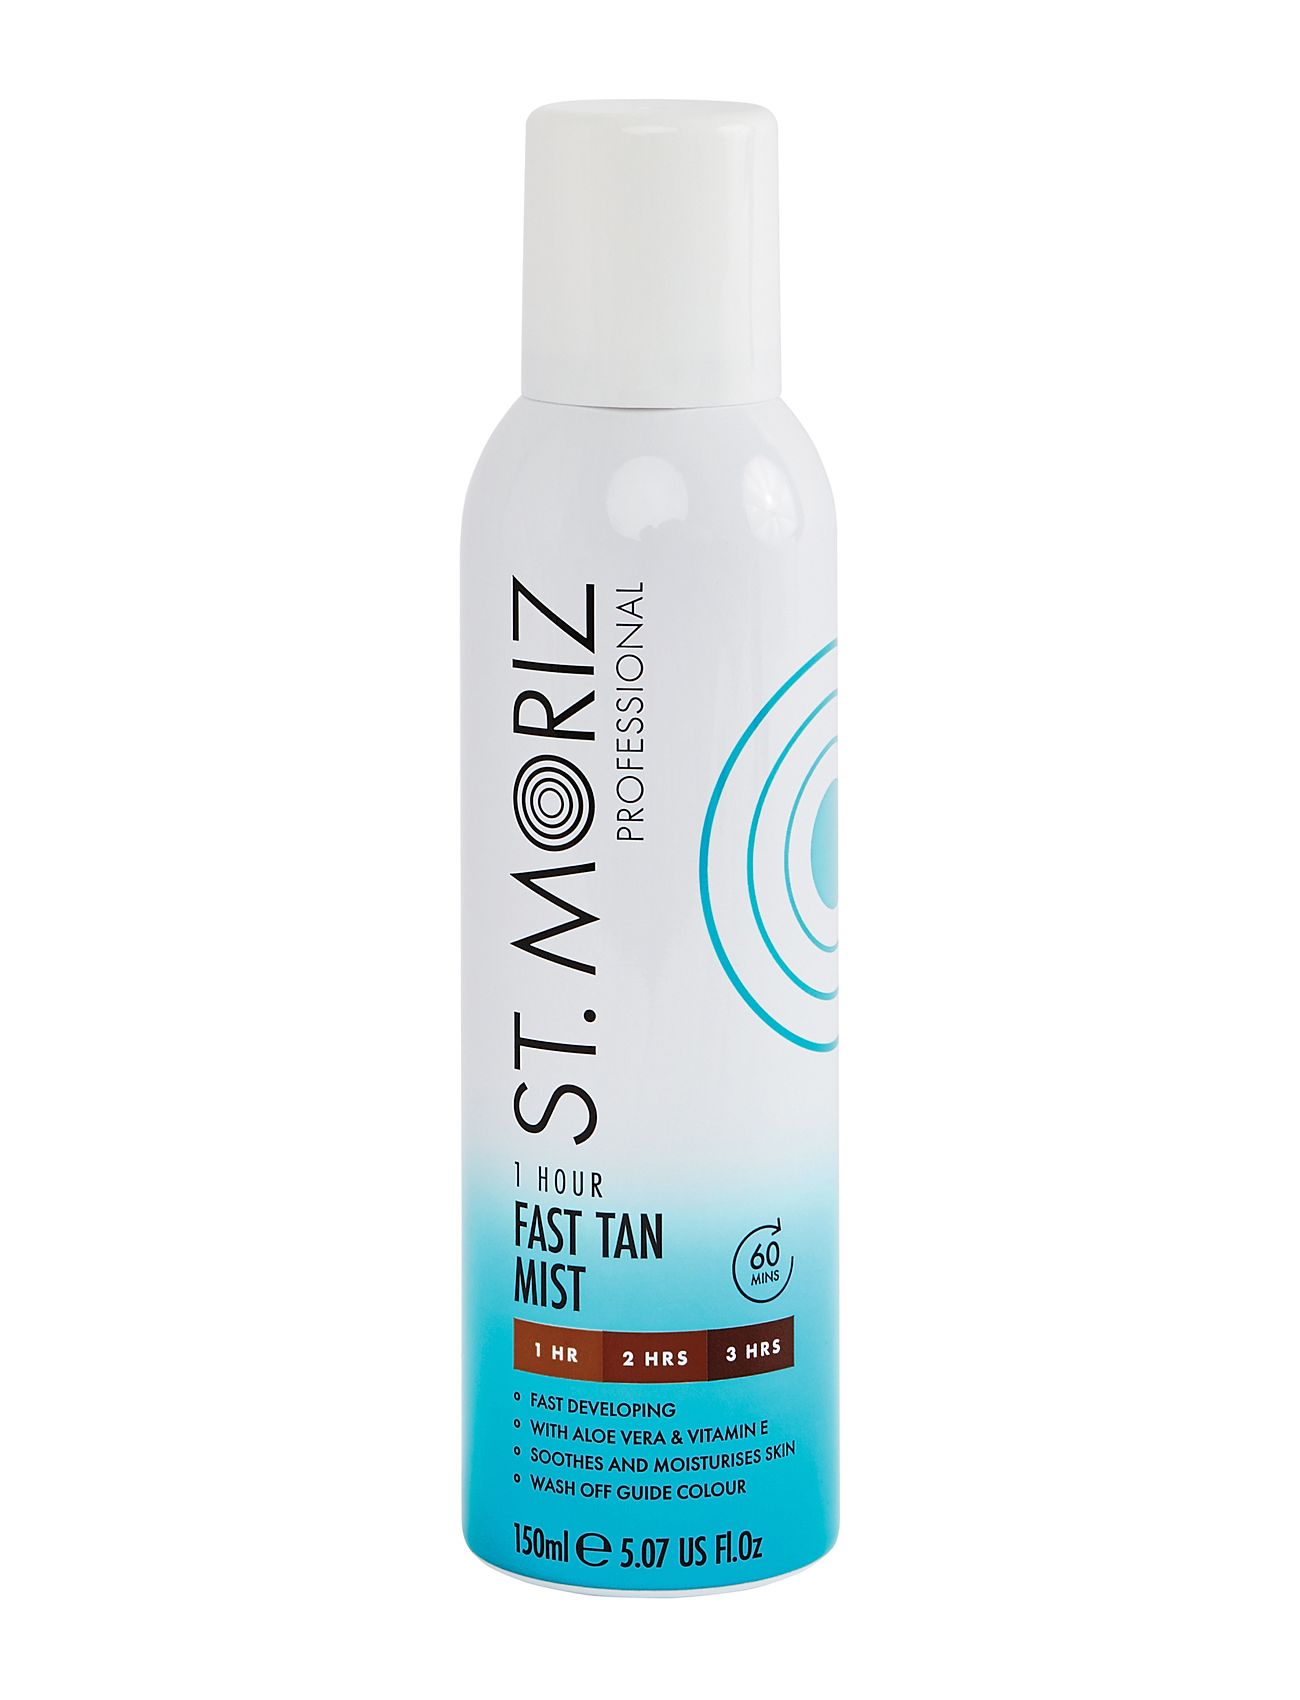 Pro 1 Hour Fast Tan Mist 150 Ml Beauty Women Skin Care Sun Products Self Tanners Mists Nude St. Moriz